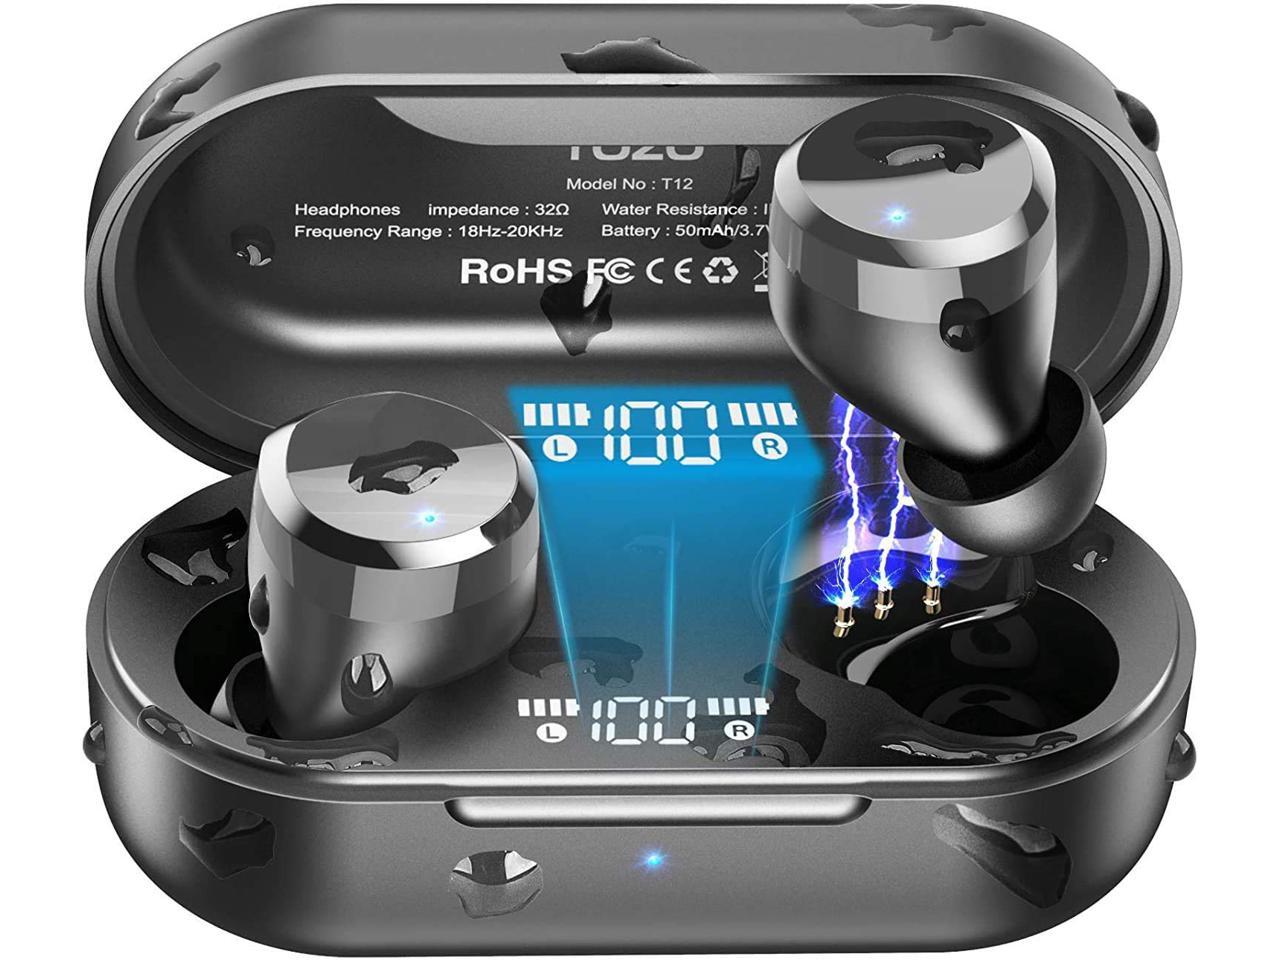 TOZO T12 Wireless Earbuds Bluetooth Headphones Premium Fidelity Sound Quality waterproof with mic $29.99